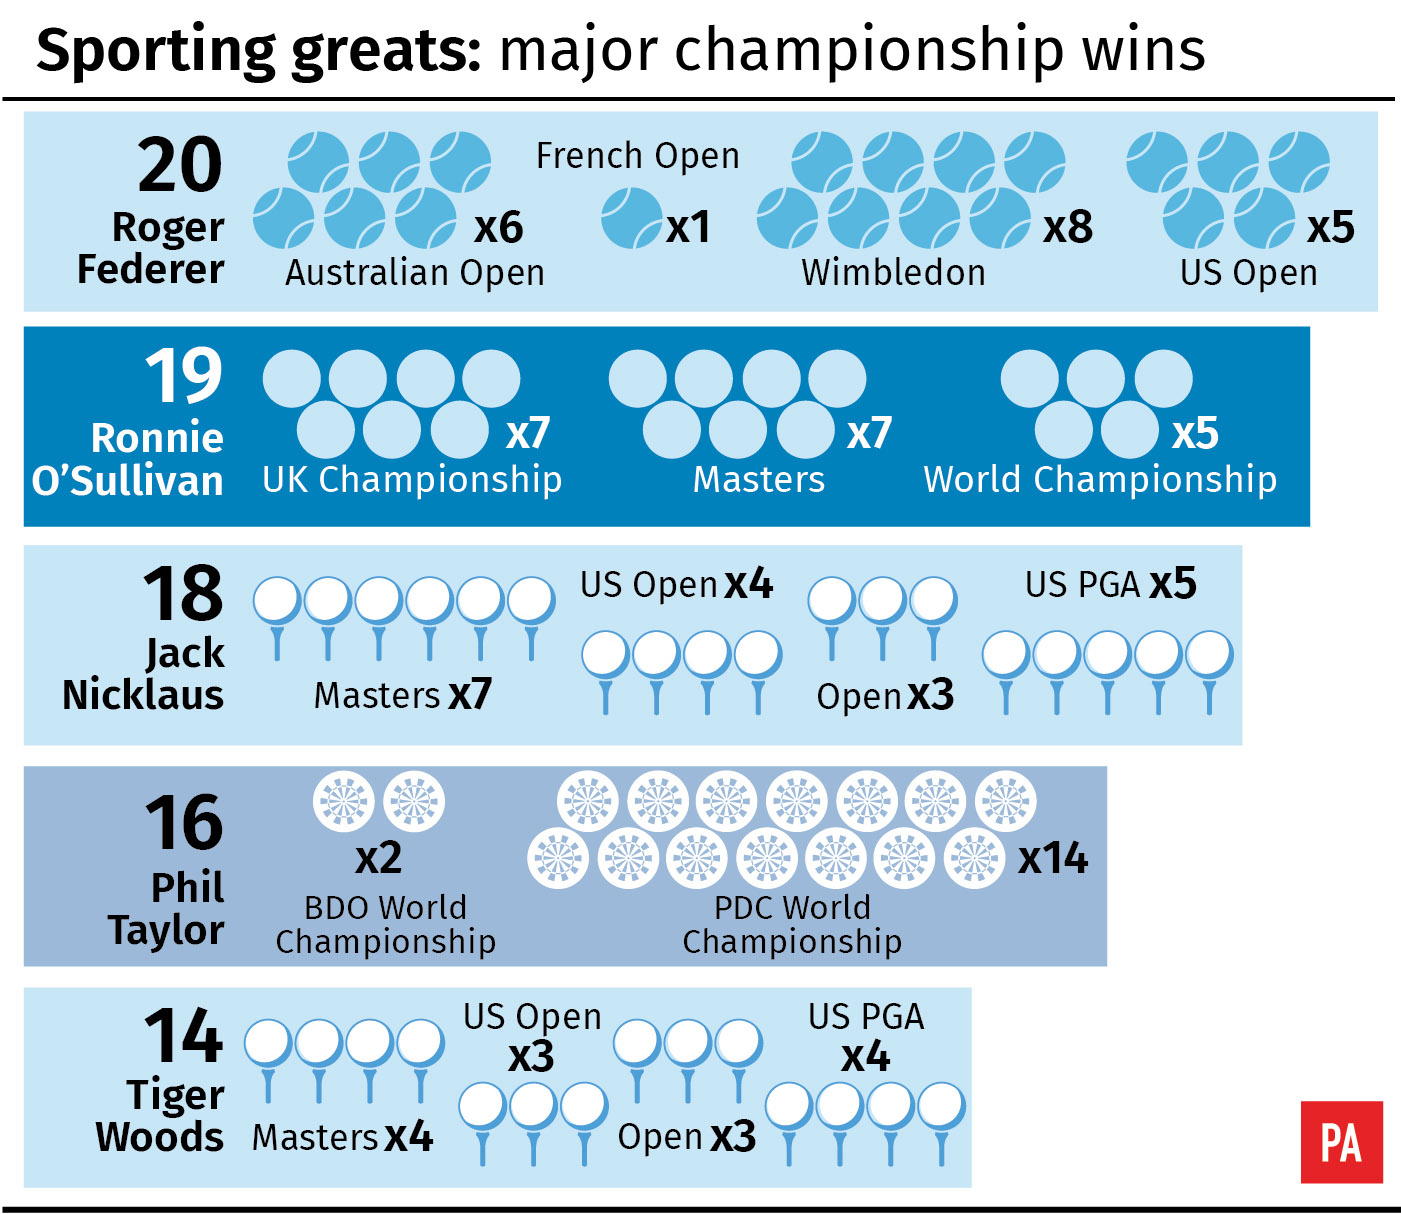 Sporting greats: Major championship wins